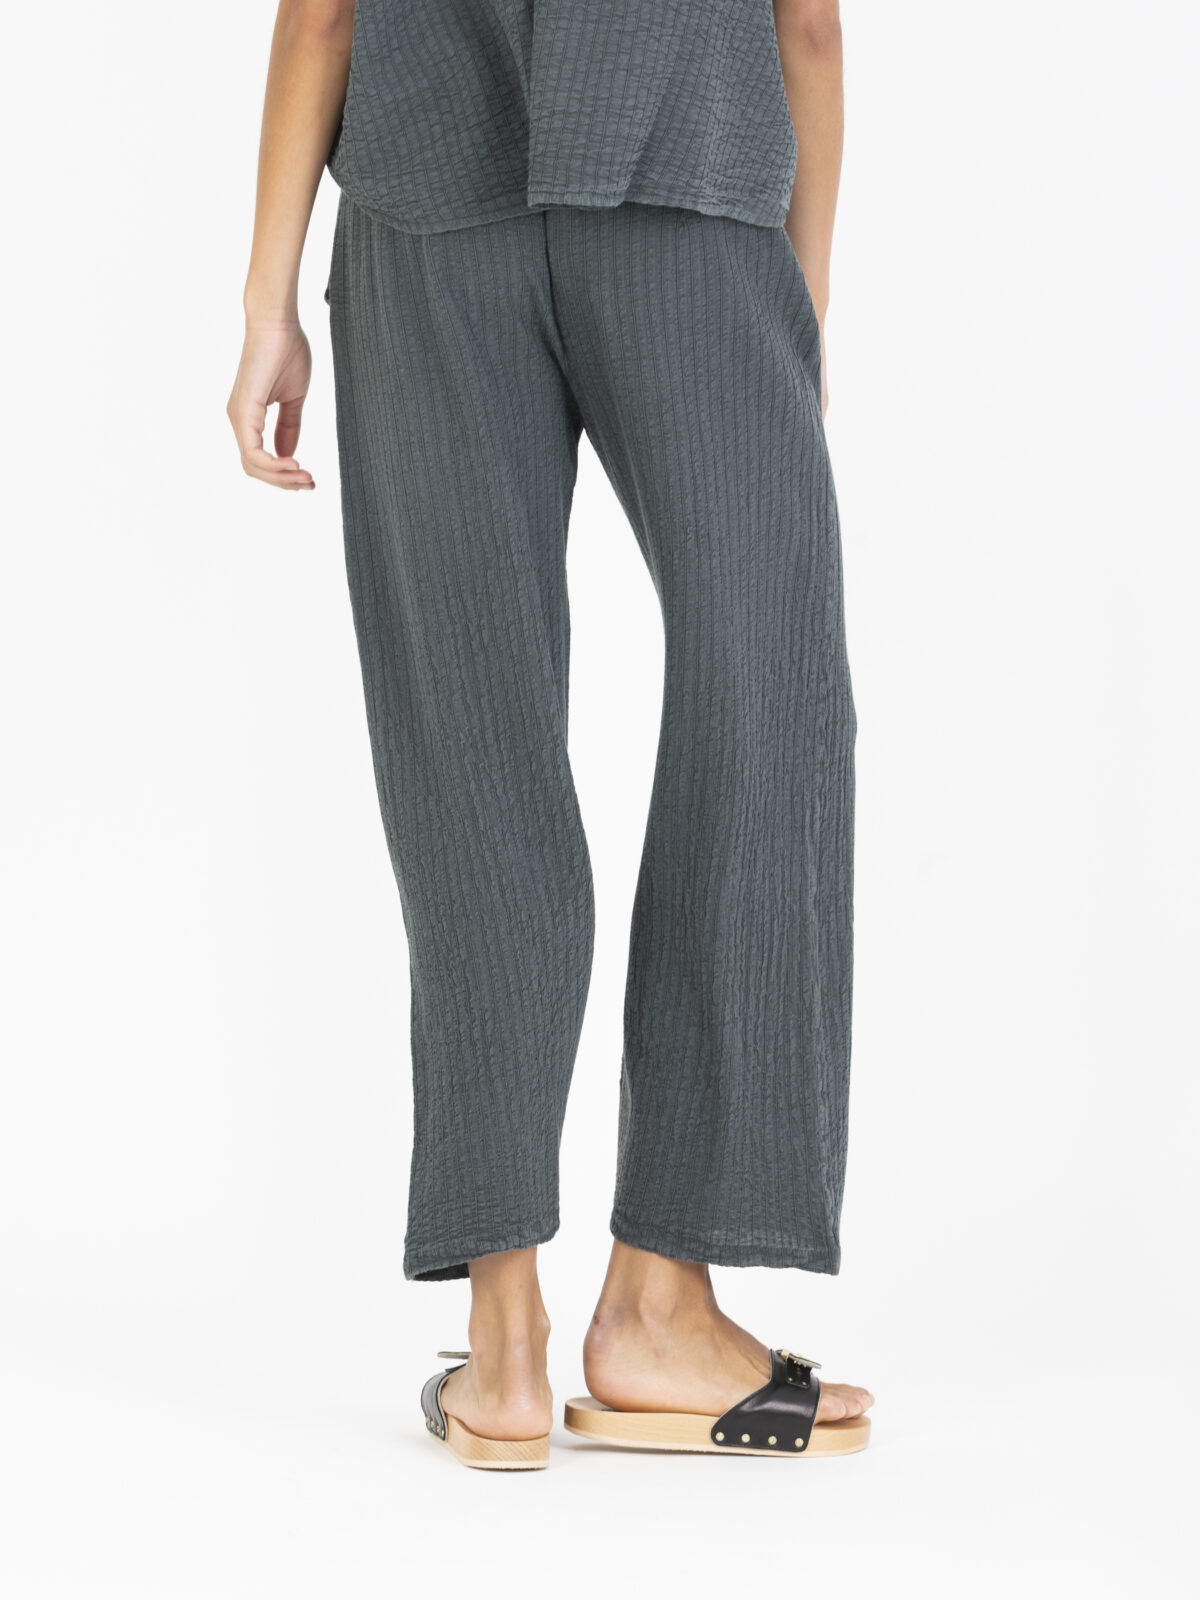 plen-trousers-cotton-silk-sheersucker-loose-drawstring-trousers-crossley-matchboxathens